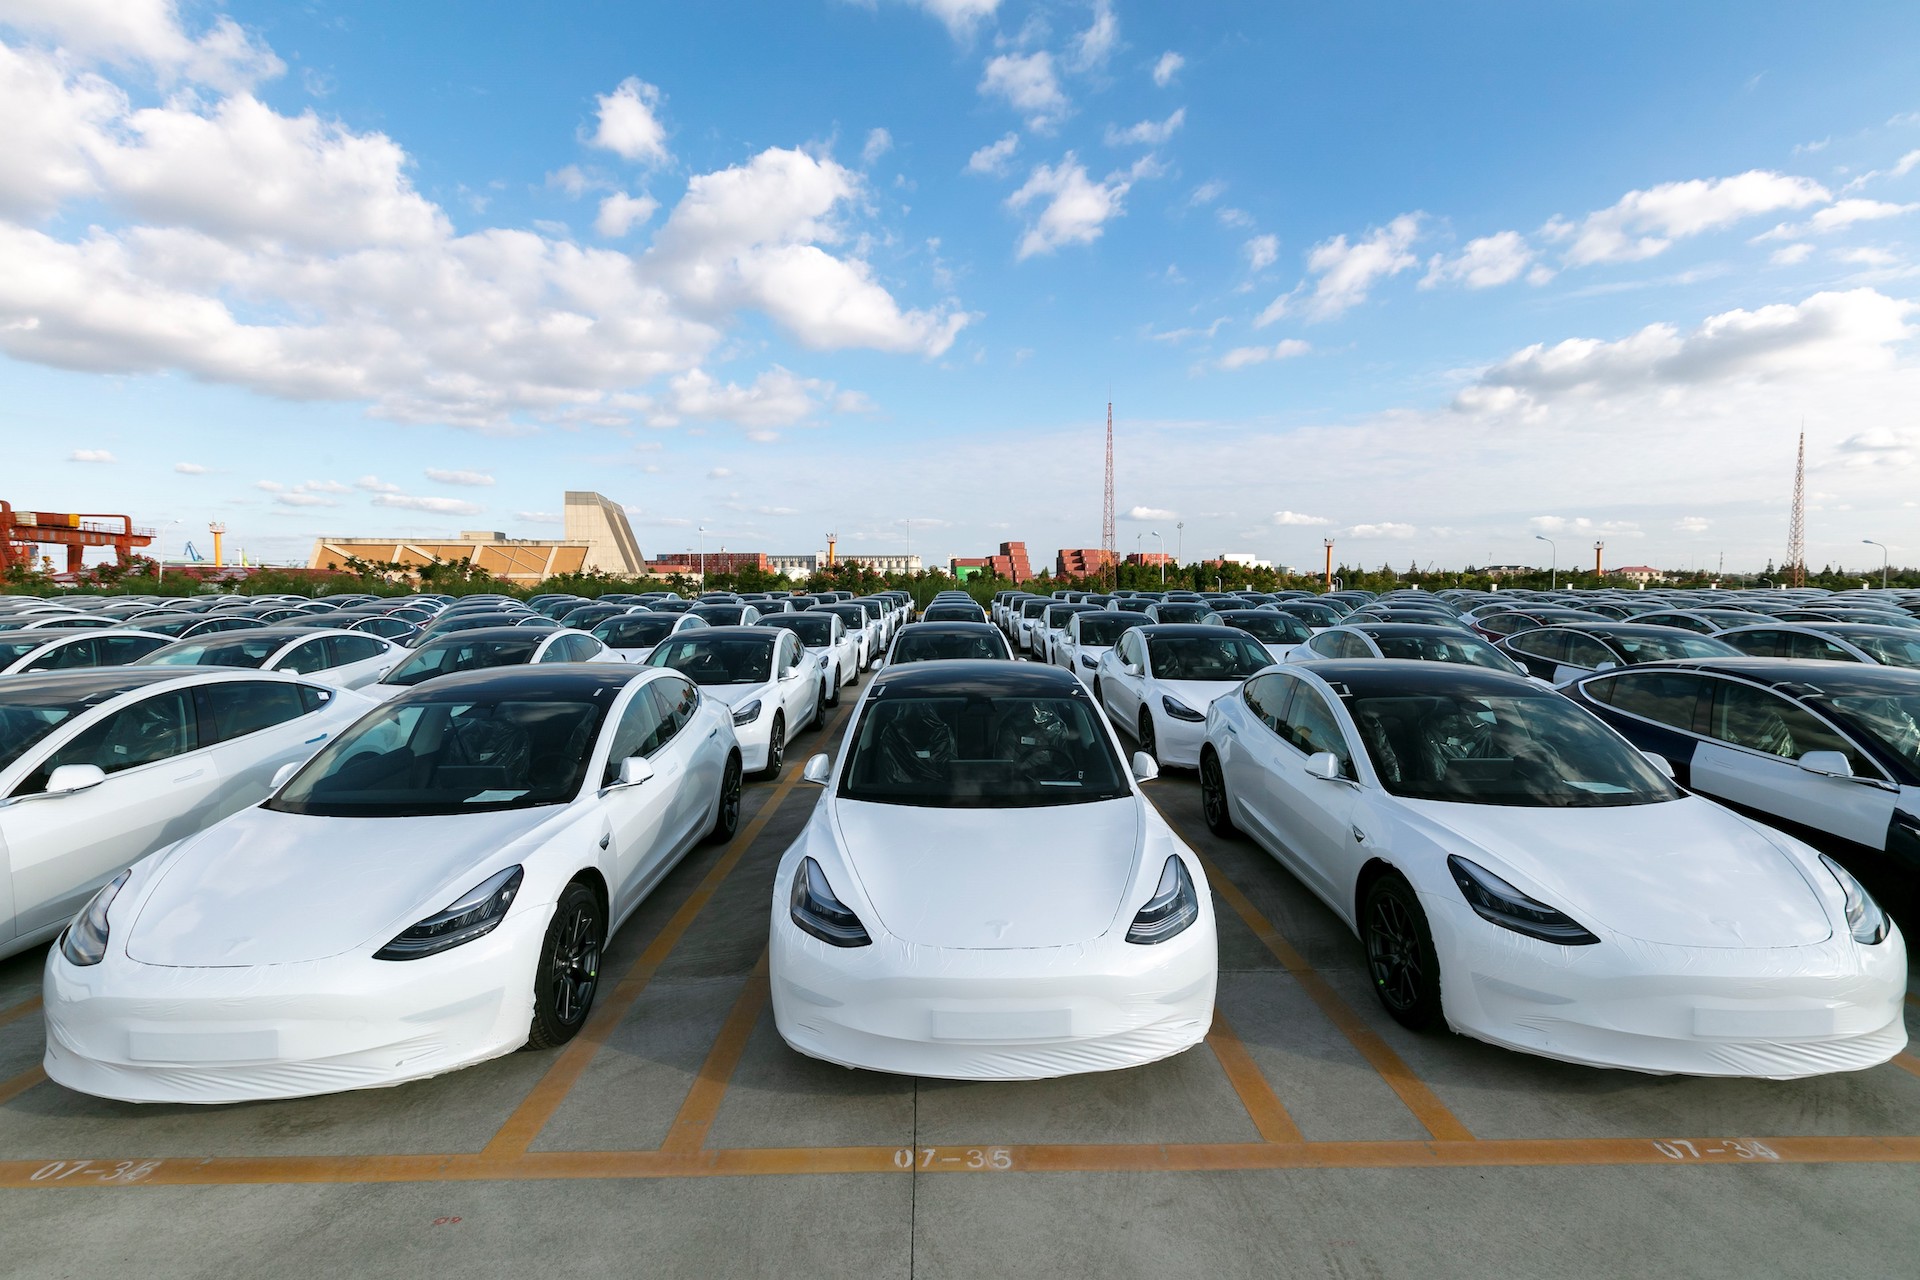 An image of several Tesla Model 3's parked outside.